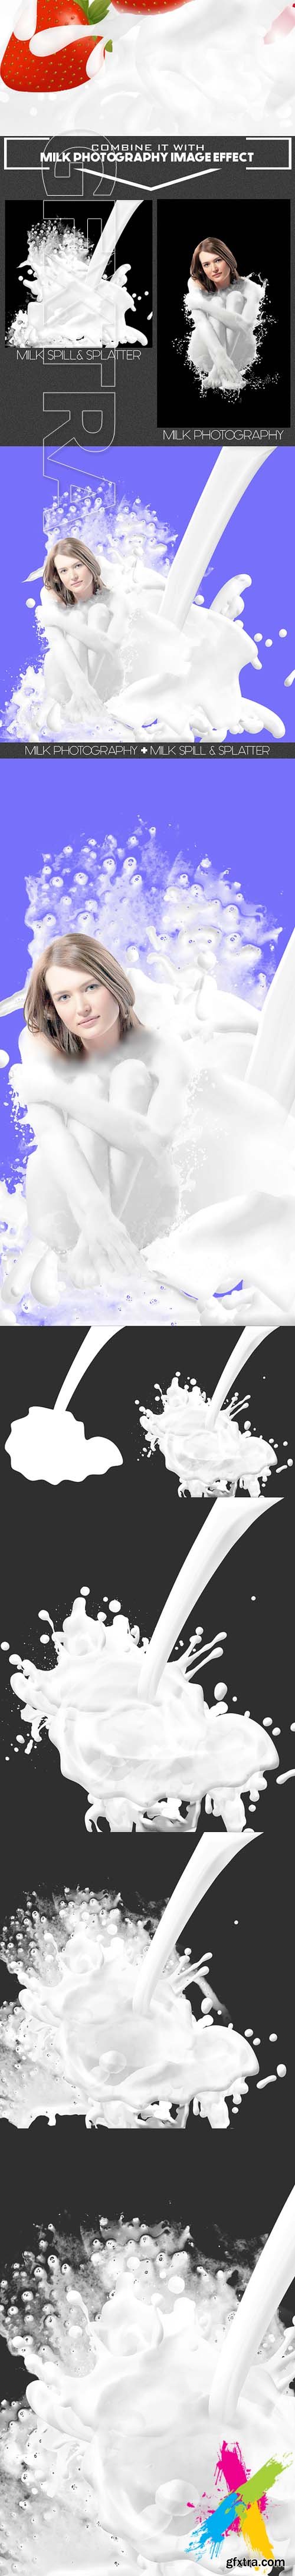 Graphicriver - Milk Spill and Splatter Image Effect 20143294